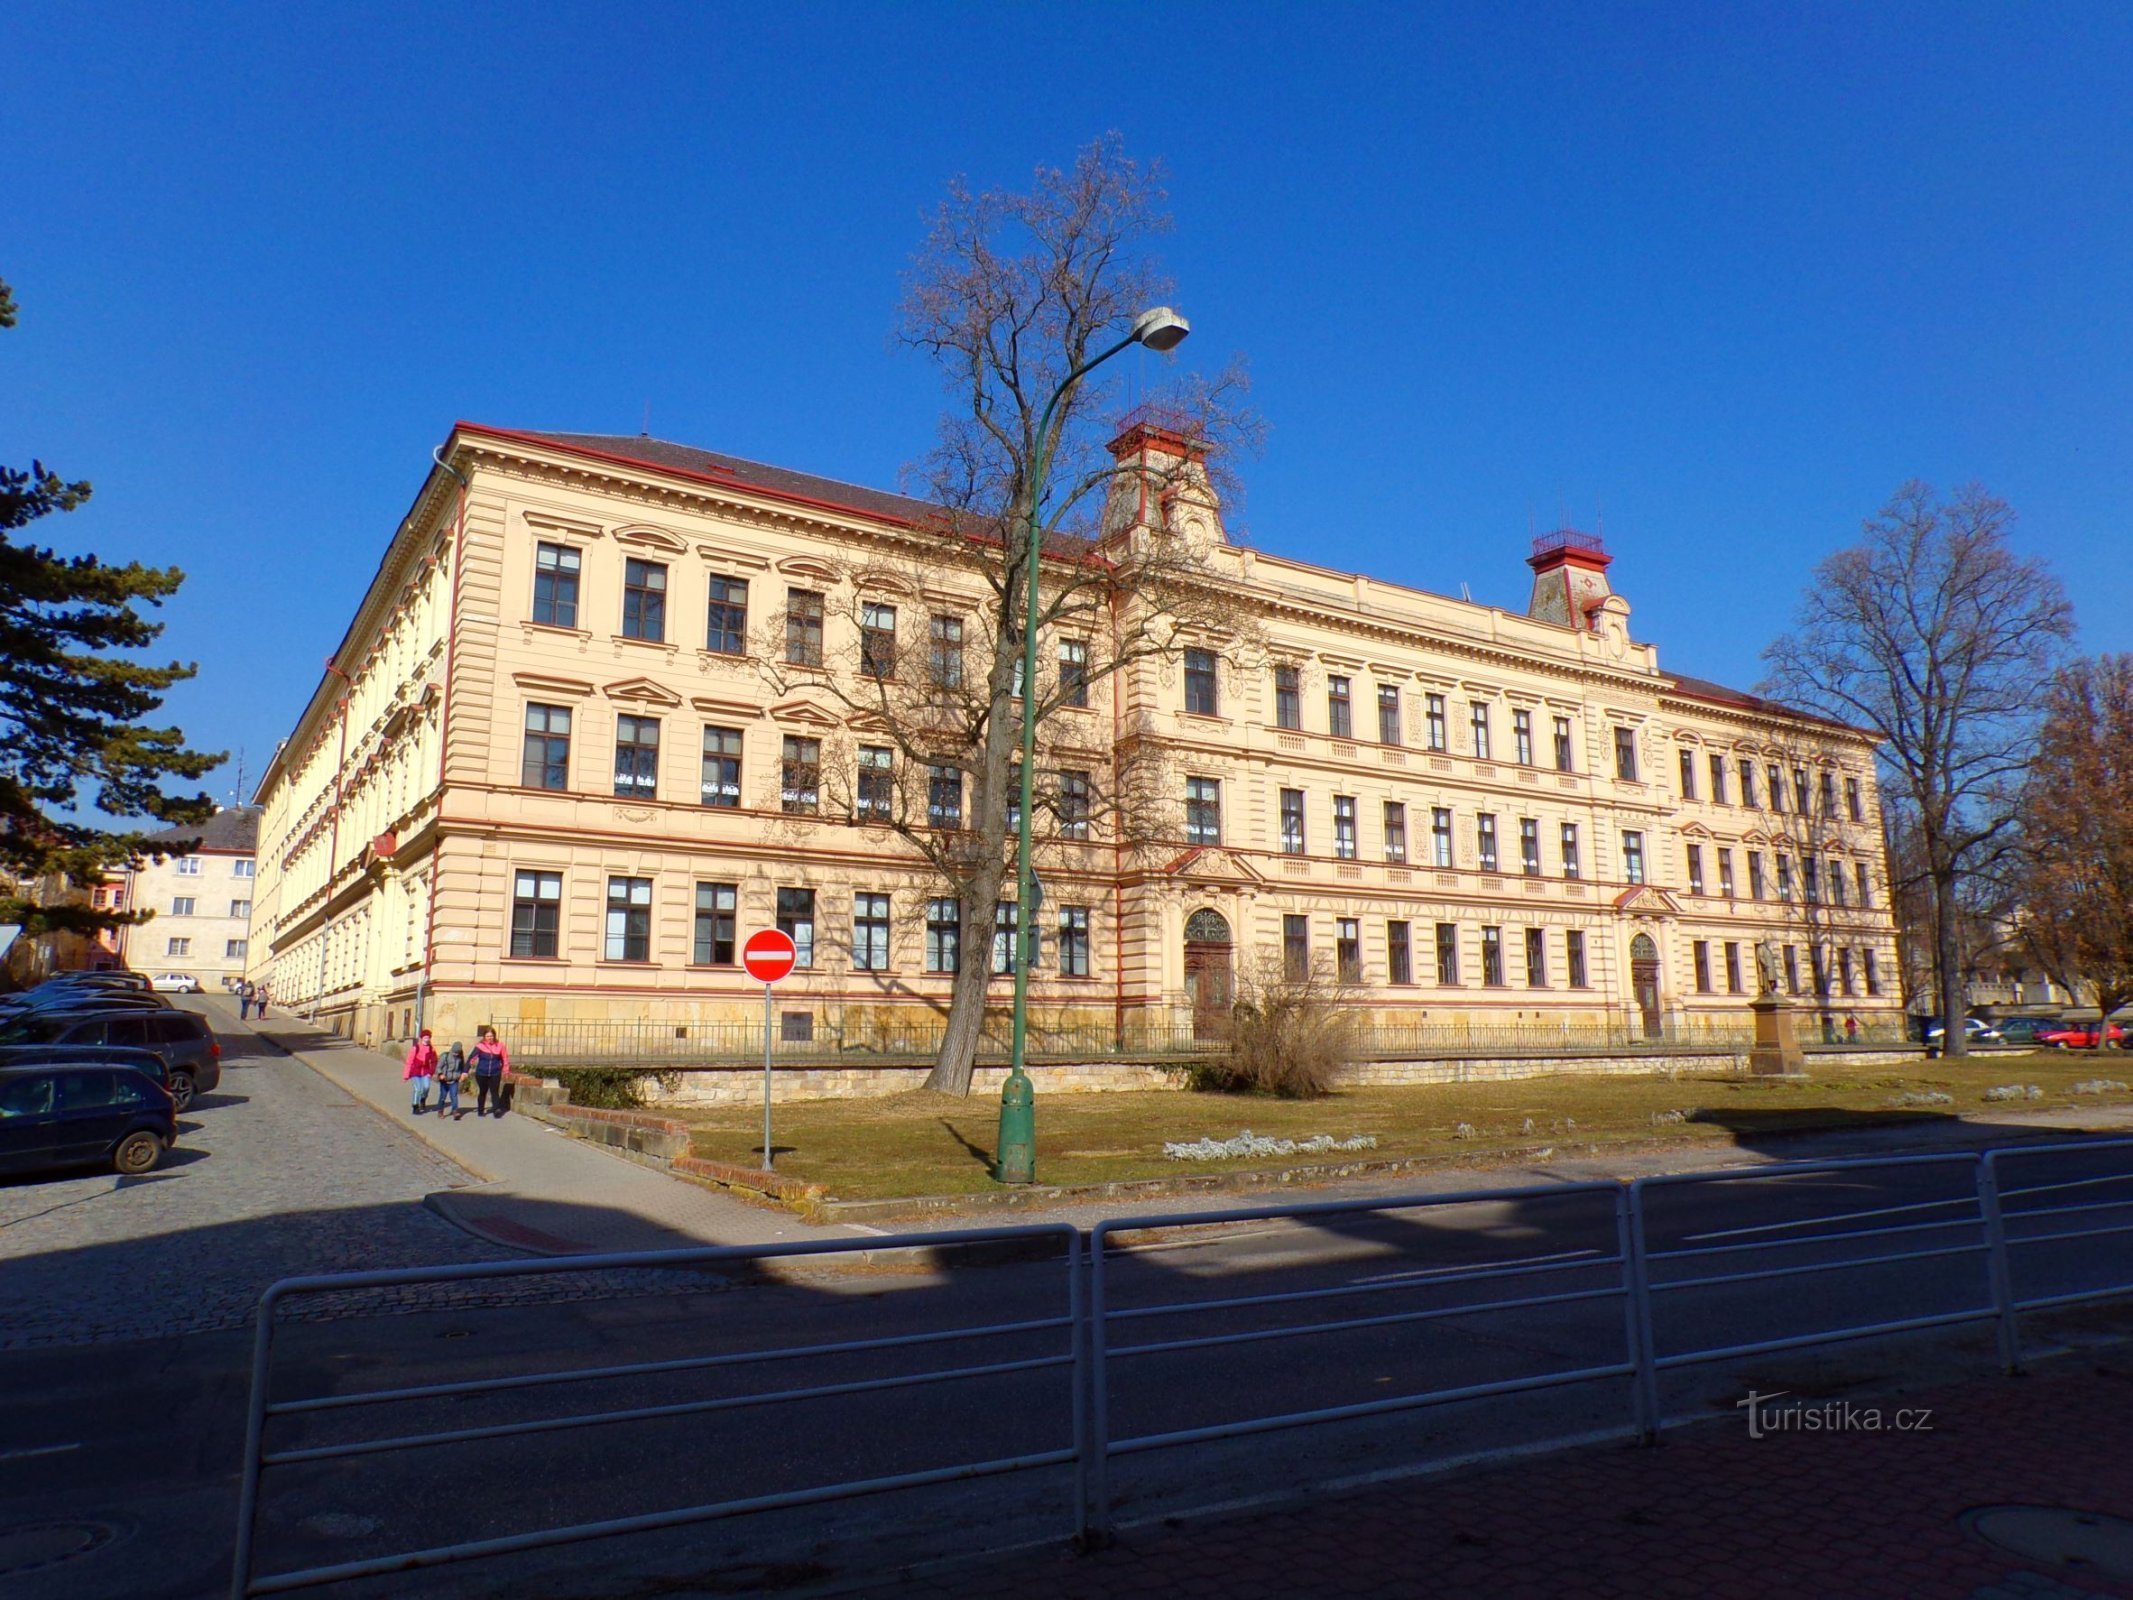 The 1st primary school building with the Jan Amos Comenius monument in the foreground (Jičín, 3.3.2022/XNUMX/XNUMX)